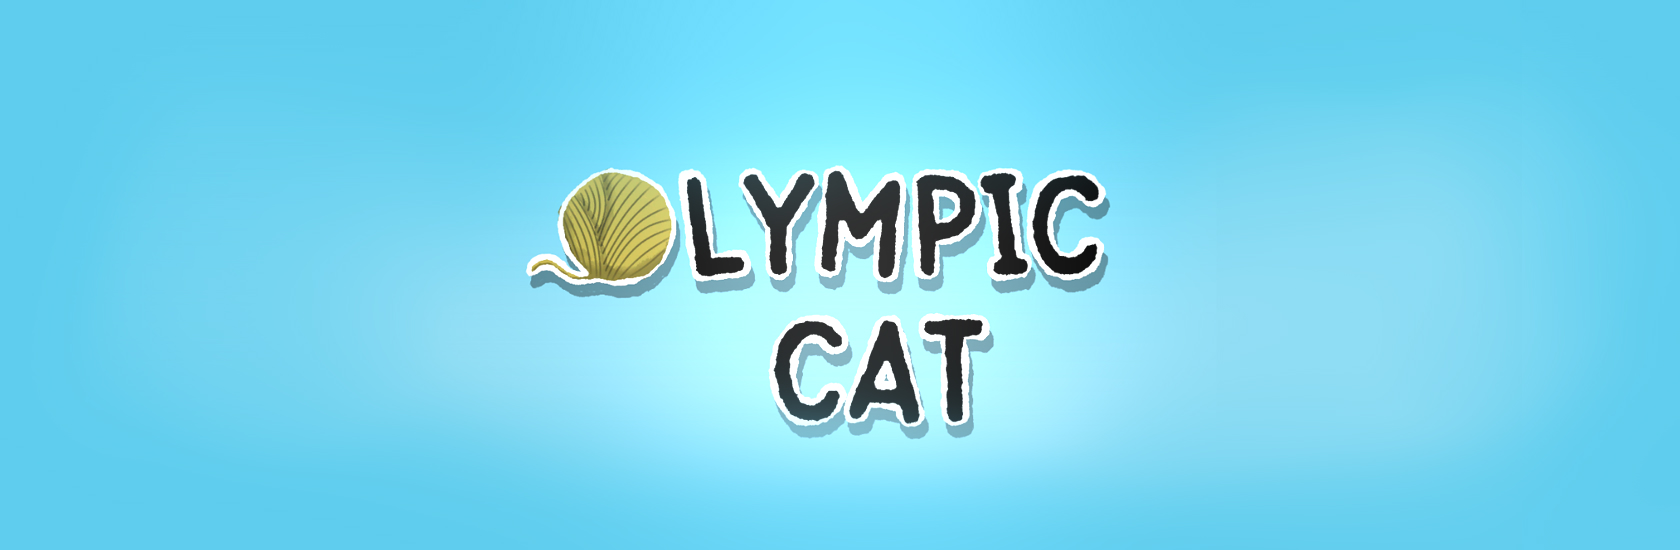 Olympic Cat